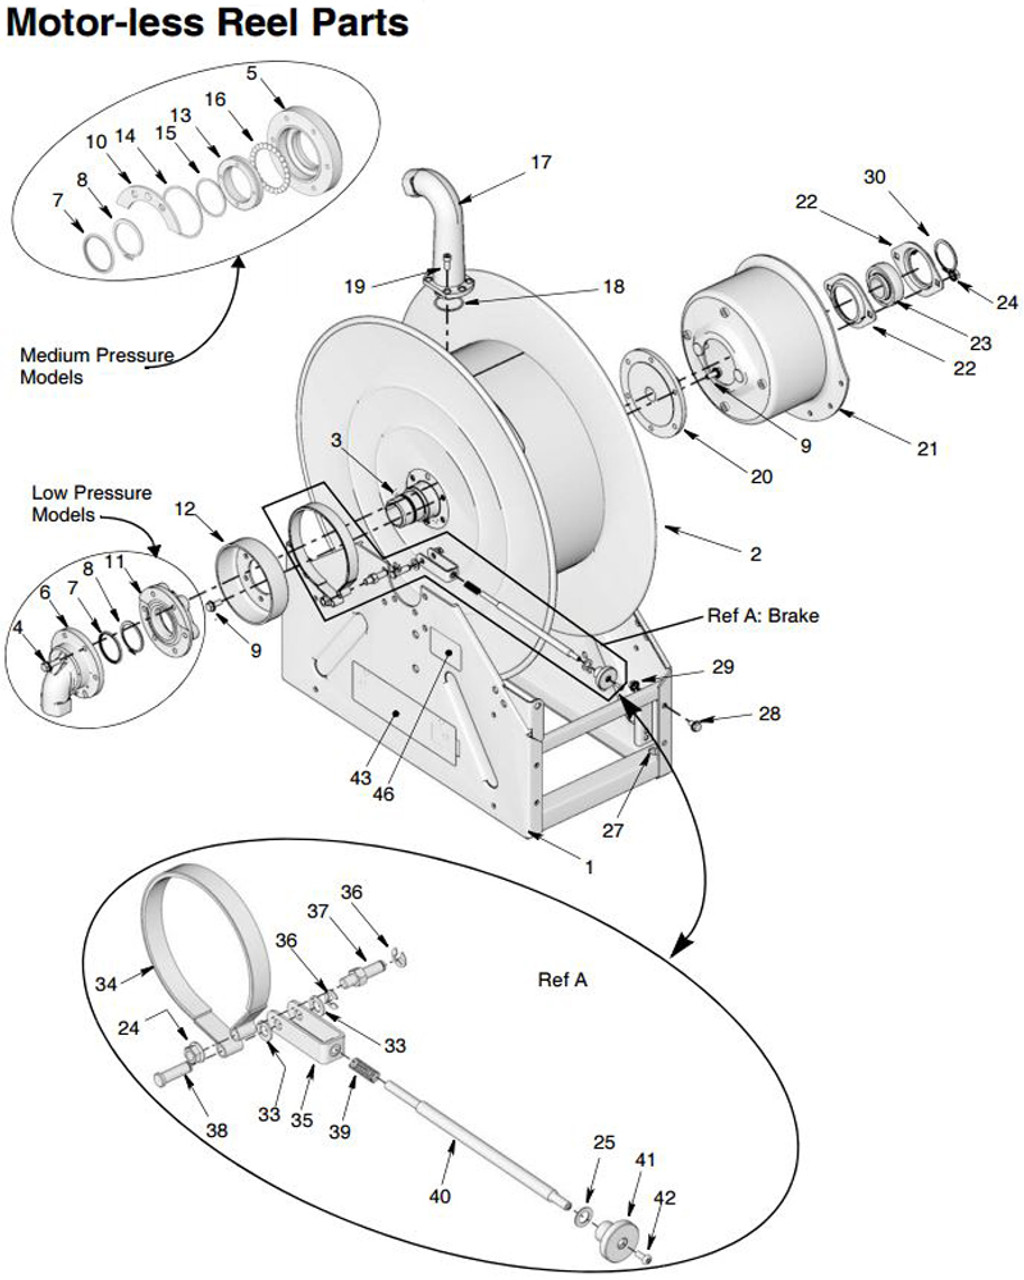 Graco XD 60 Hose Reel Motor Assembly & Hydraulic Control Kits